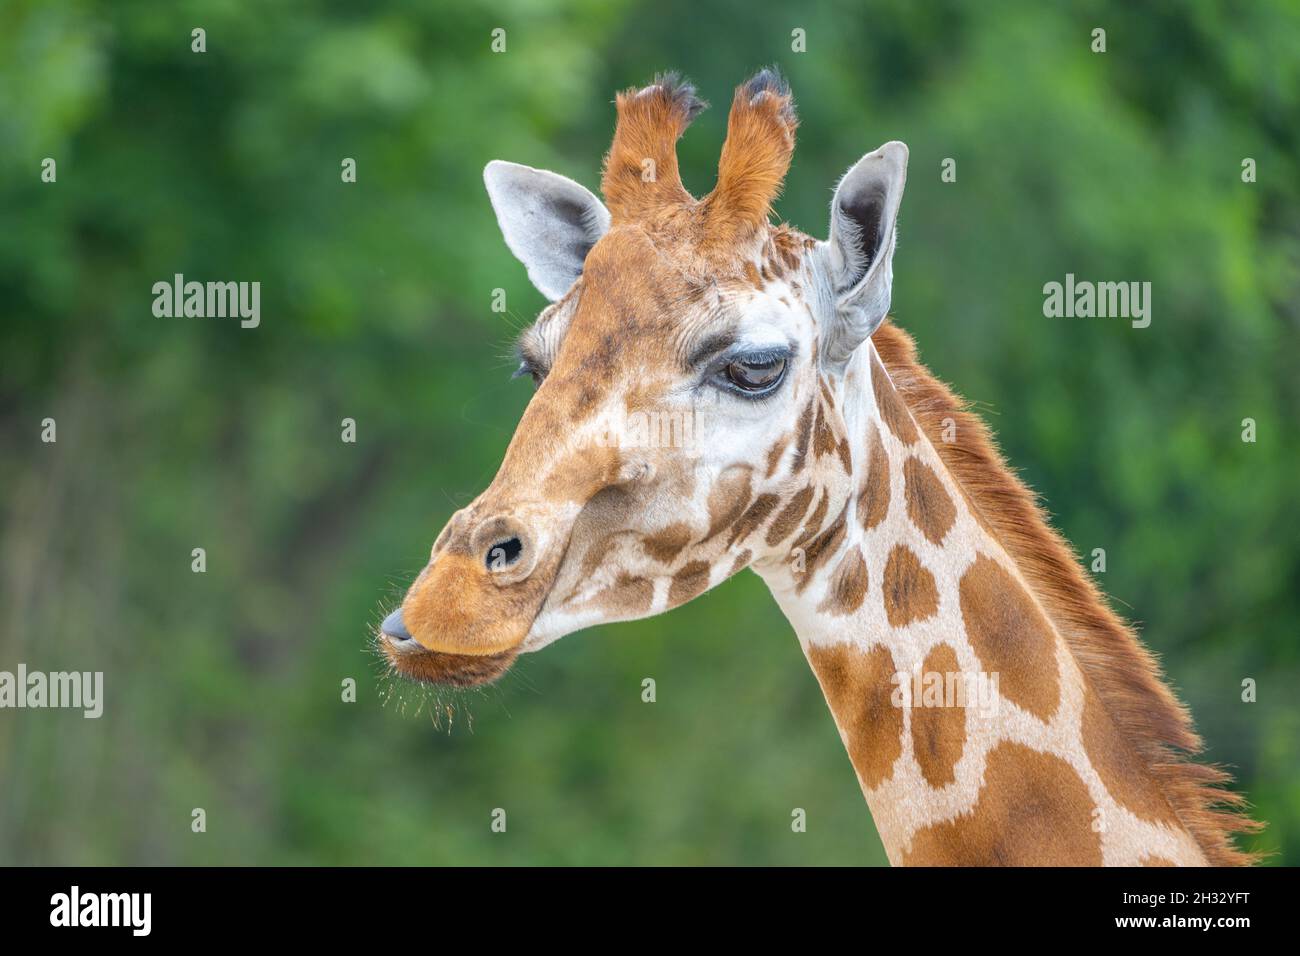 Cute giraffe portrait. Close up photography Stock Photo